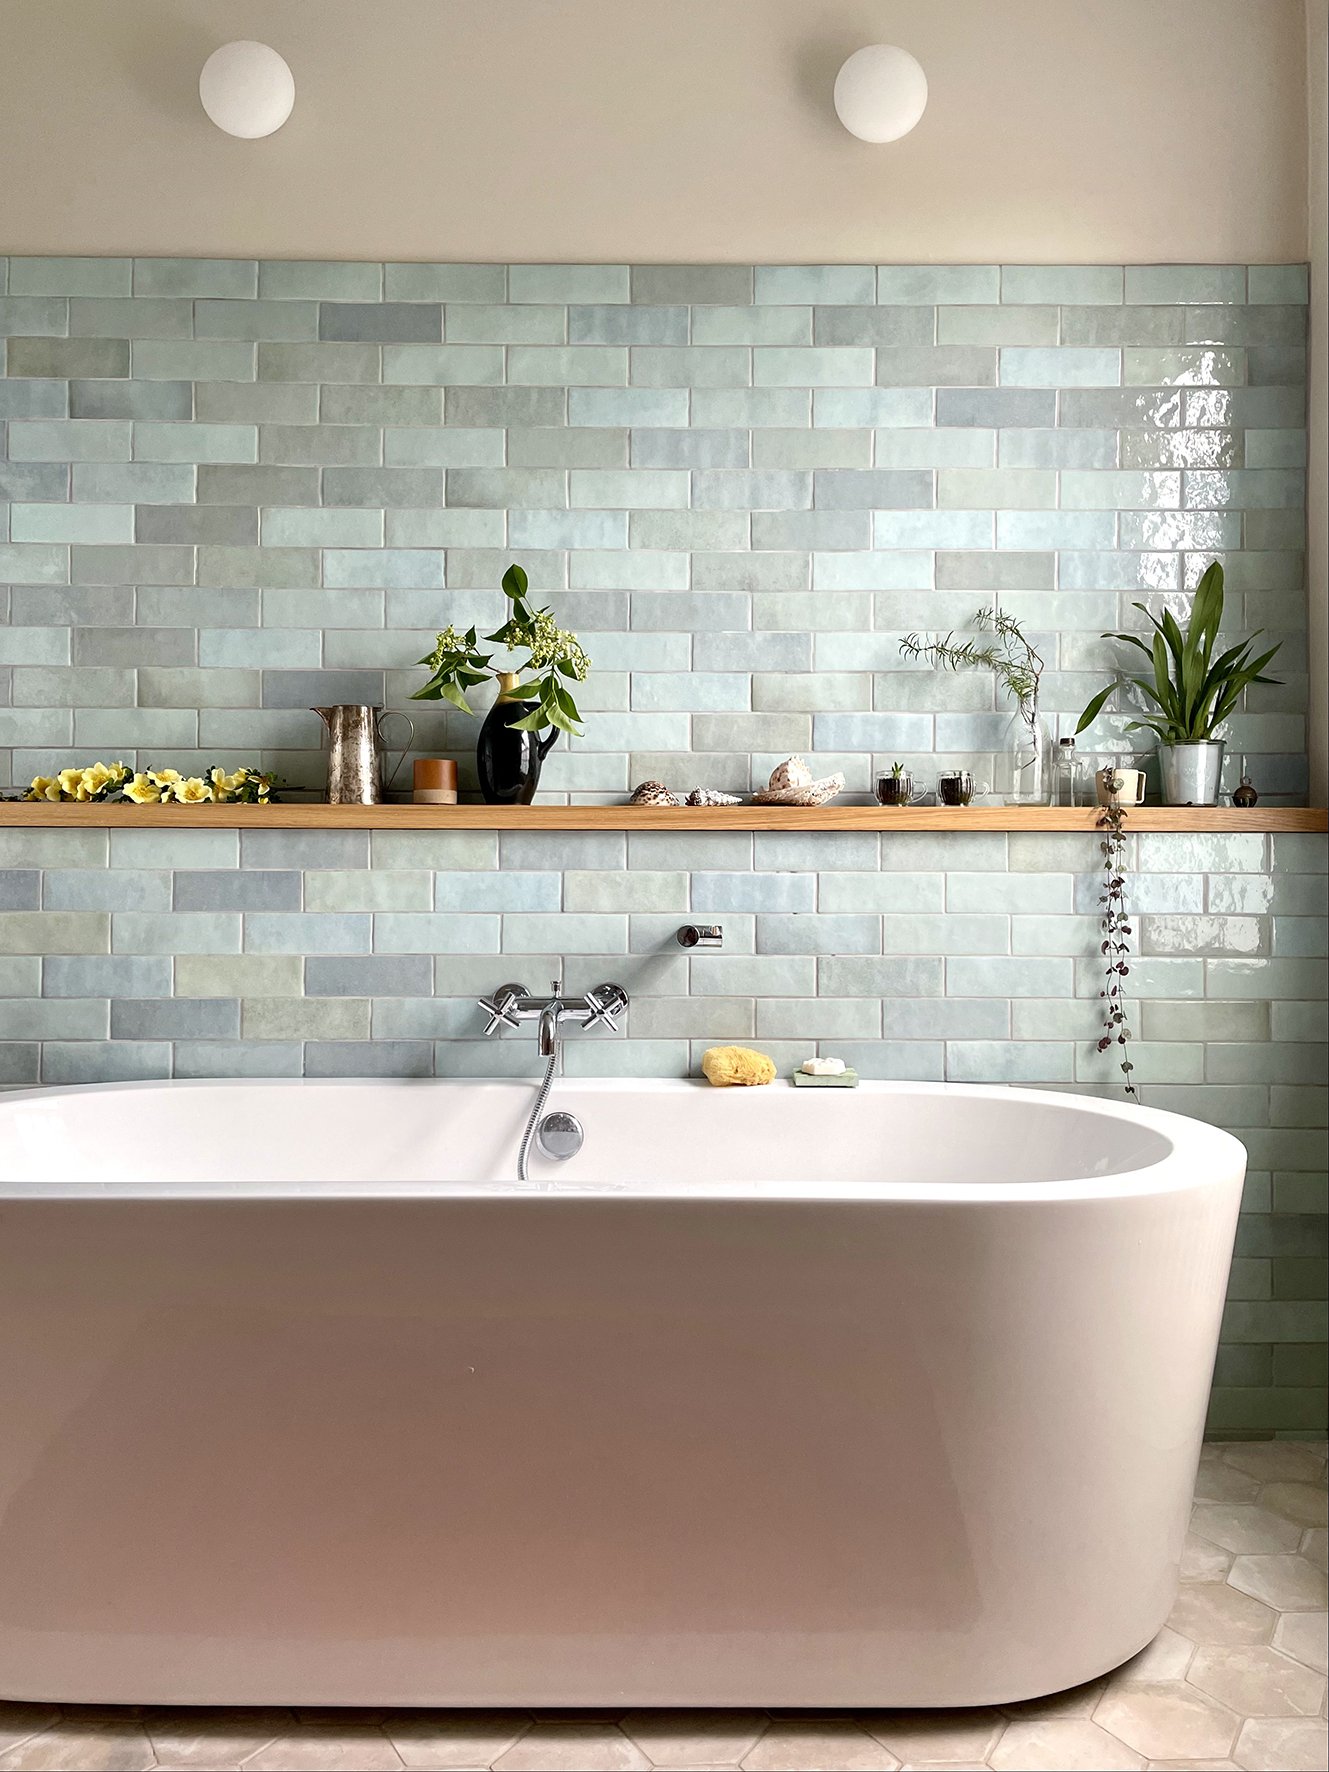 CharlotteBucciero-Interiors-Bathroom-remodel-bathtub-blue-tile-walllight-design.jpg